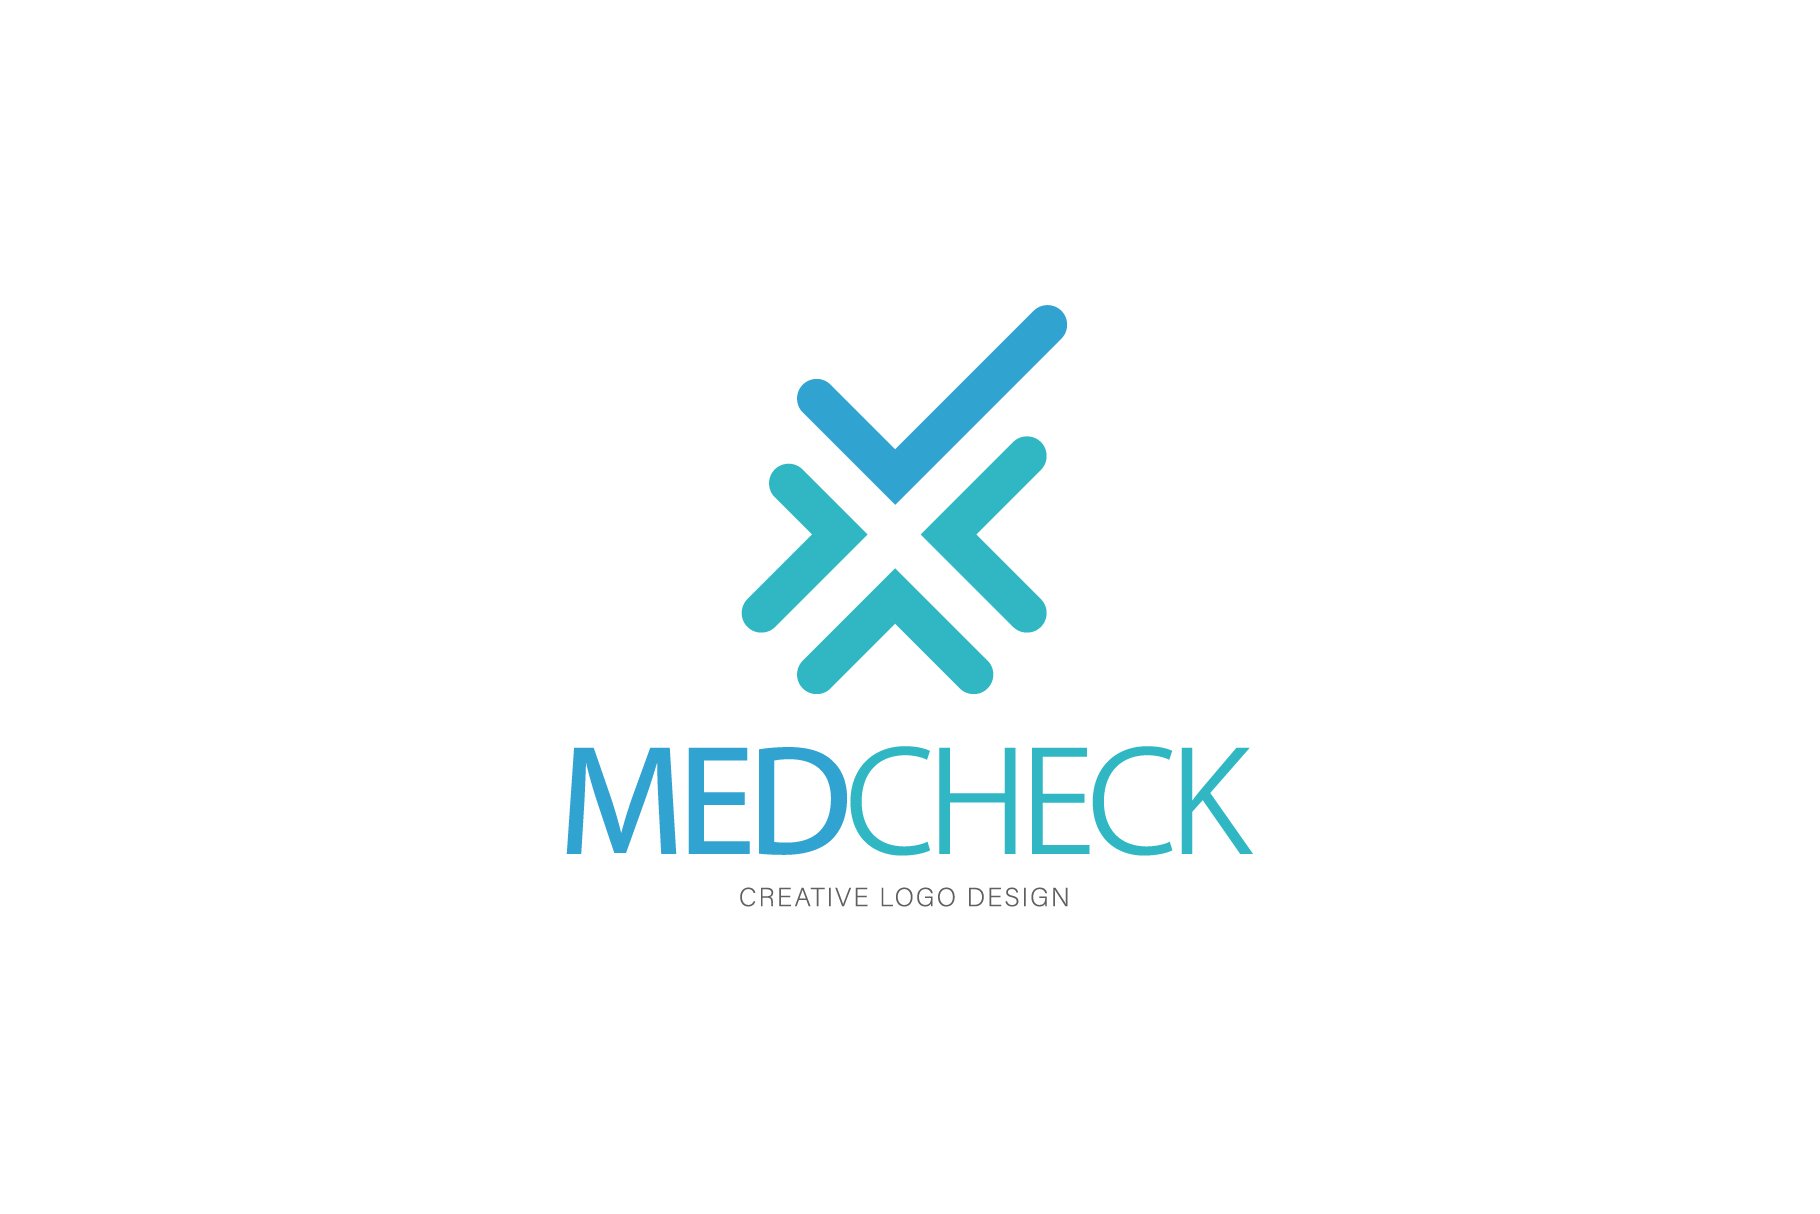 medical check logos cover image.